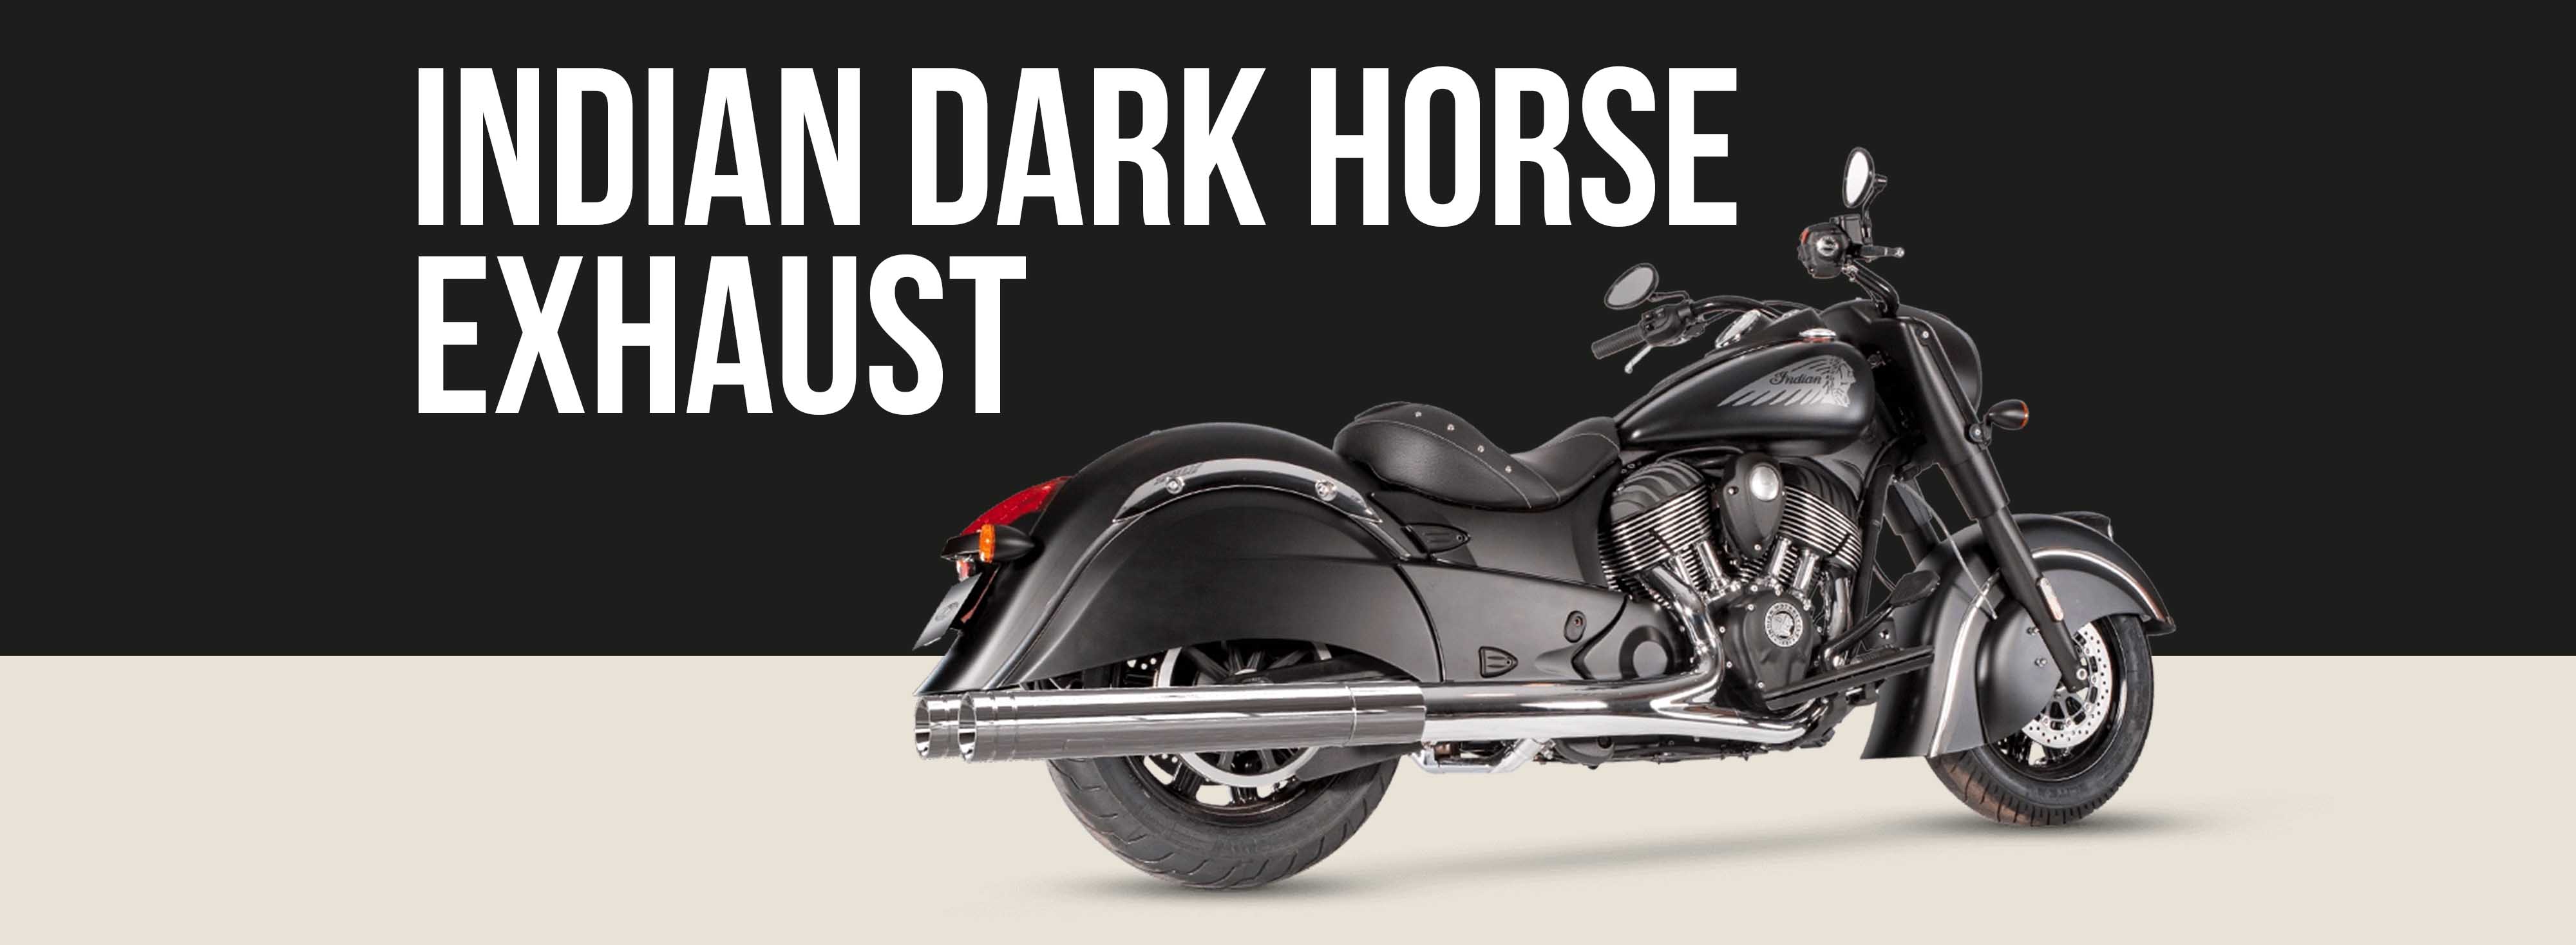 Indian Dark Horse Motorcycle Brand Page Header